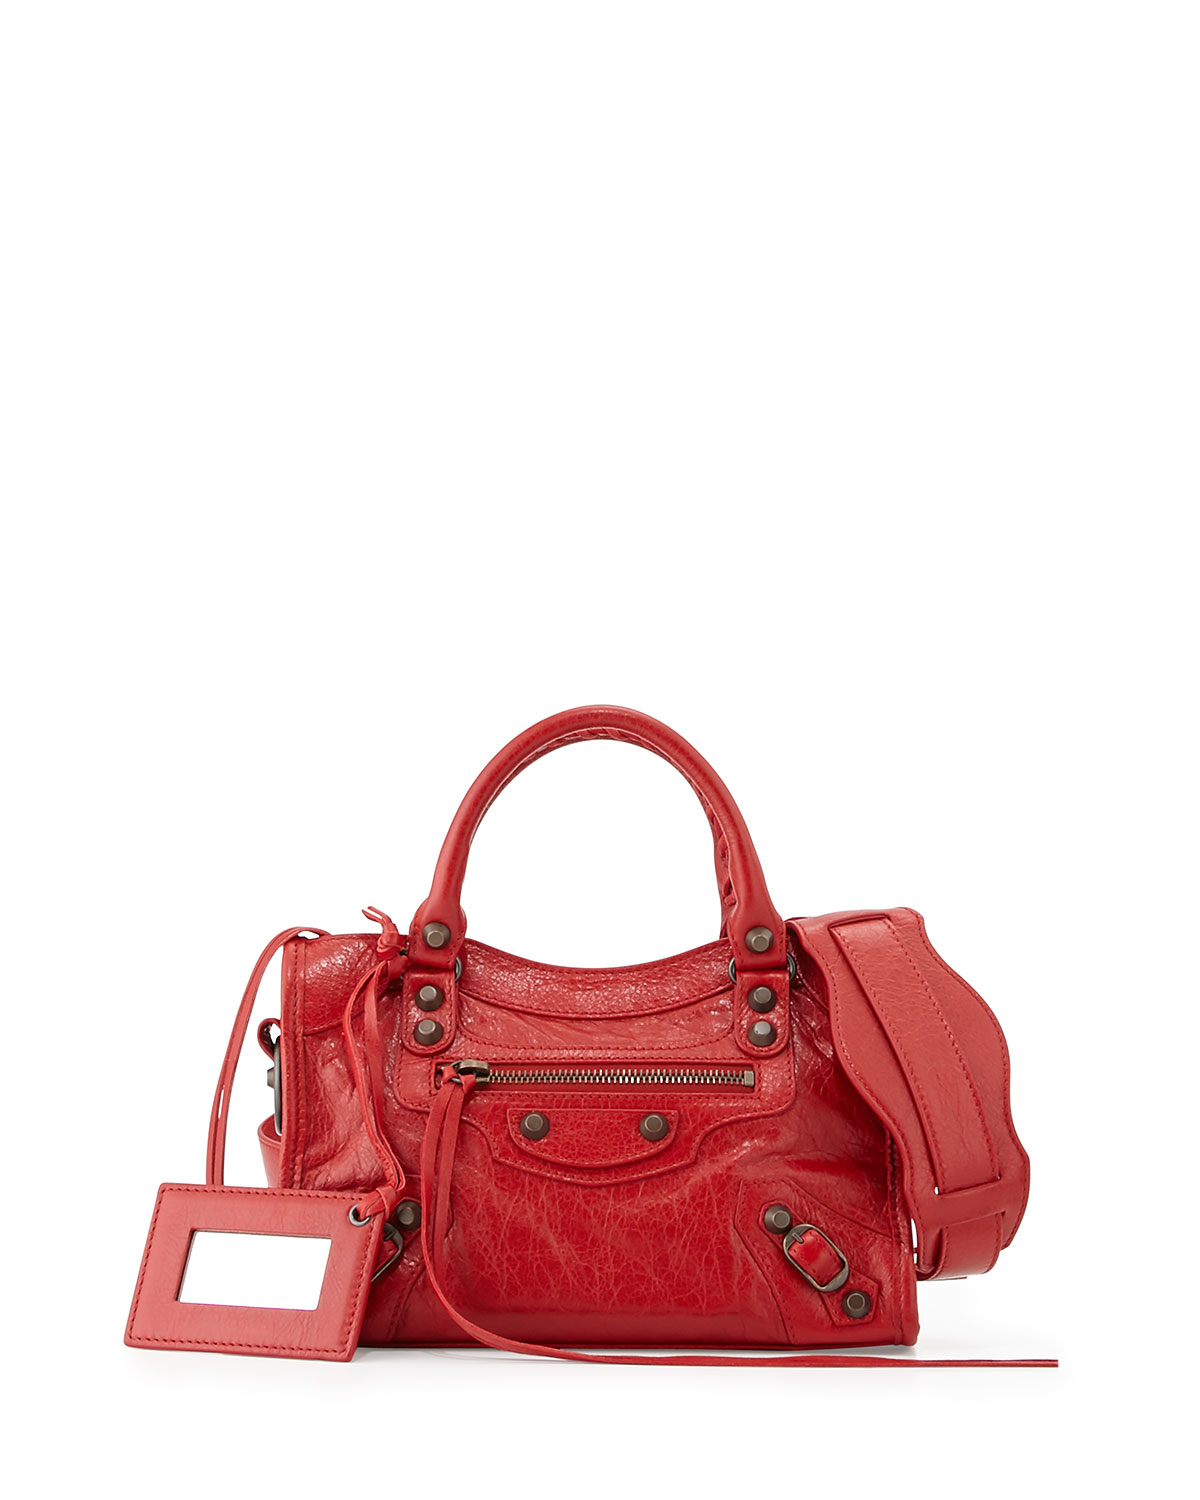 Lyst - Balenciaga Classic Mini City Shoulder Bag in Red